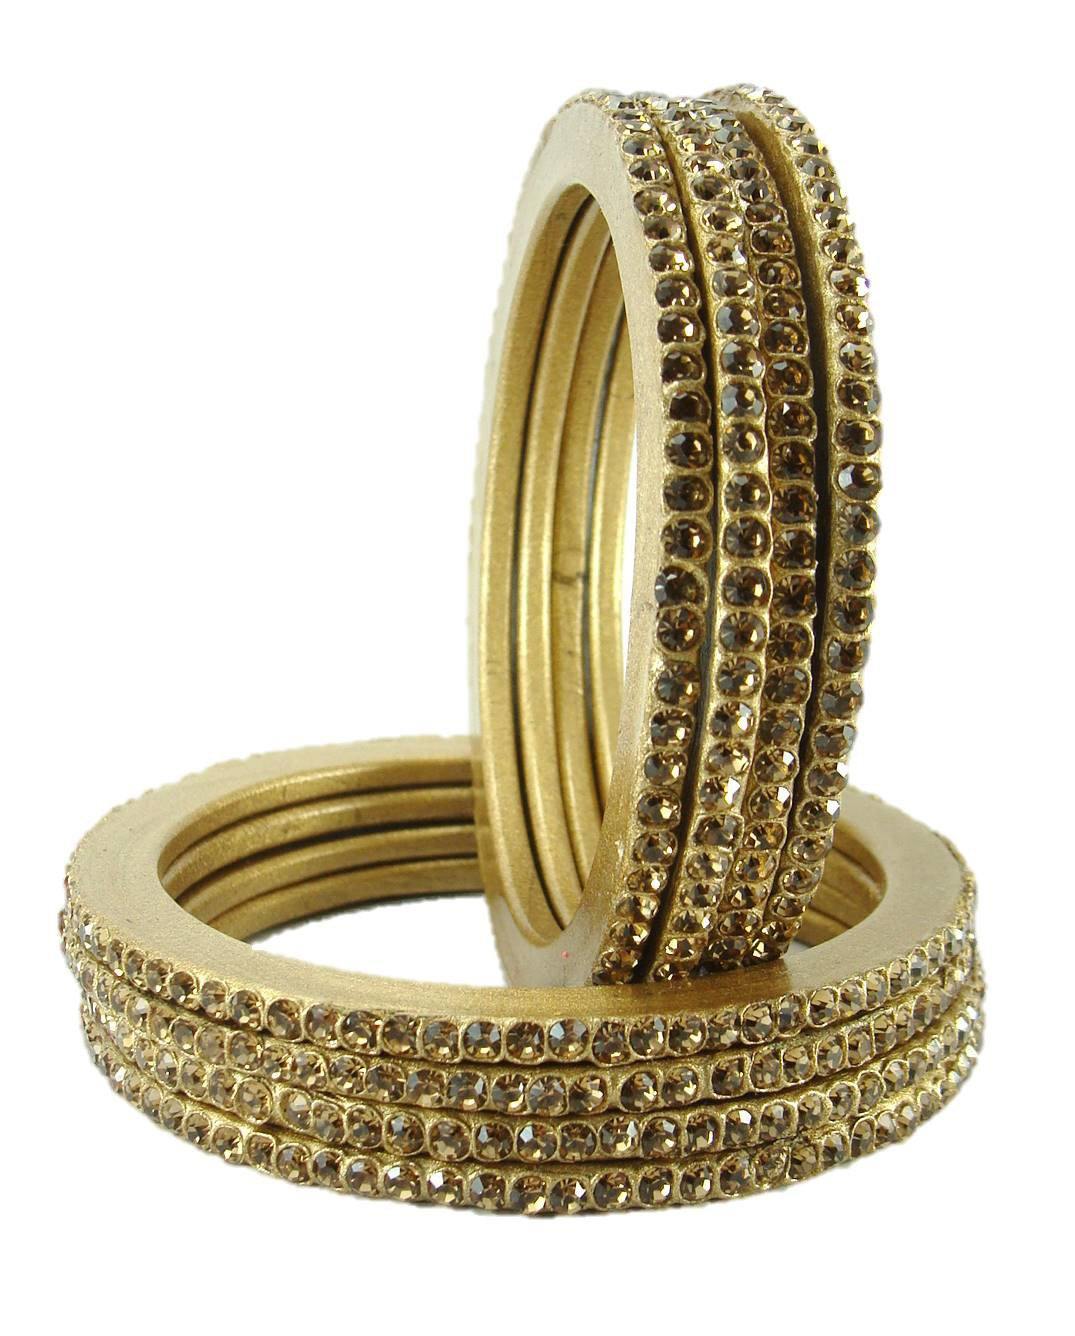 sukriti rajasthani traditional golden lac bangles for women - set of 8